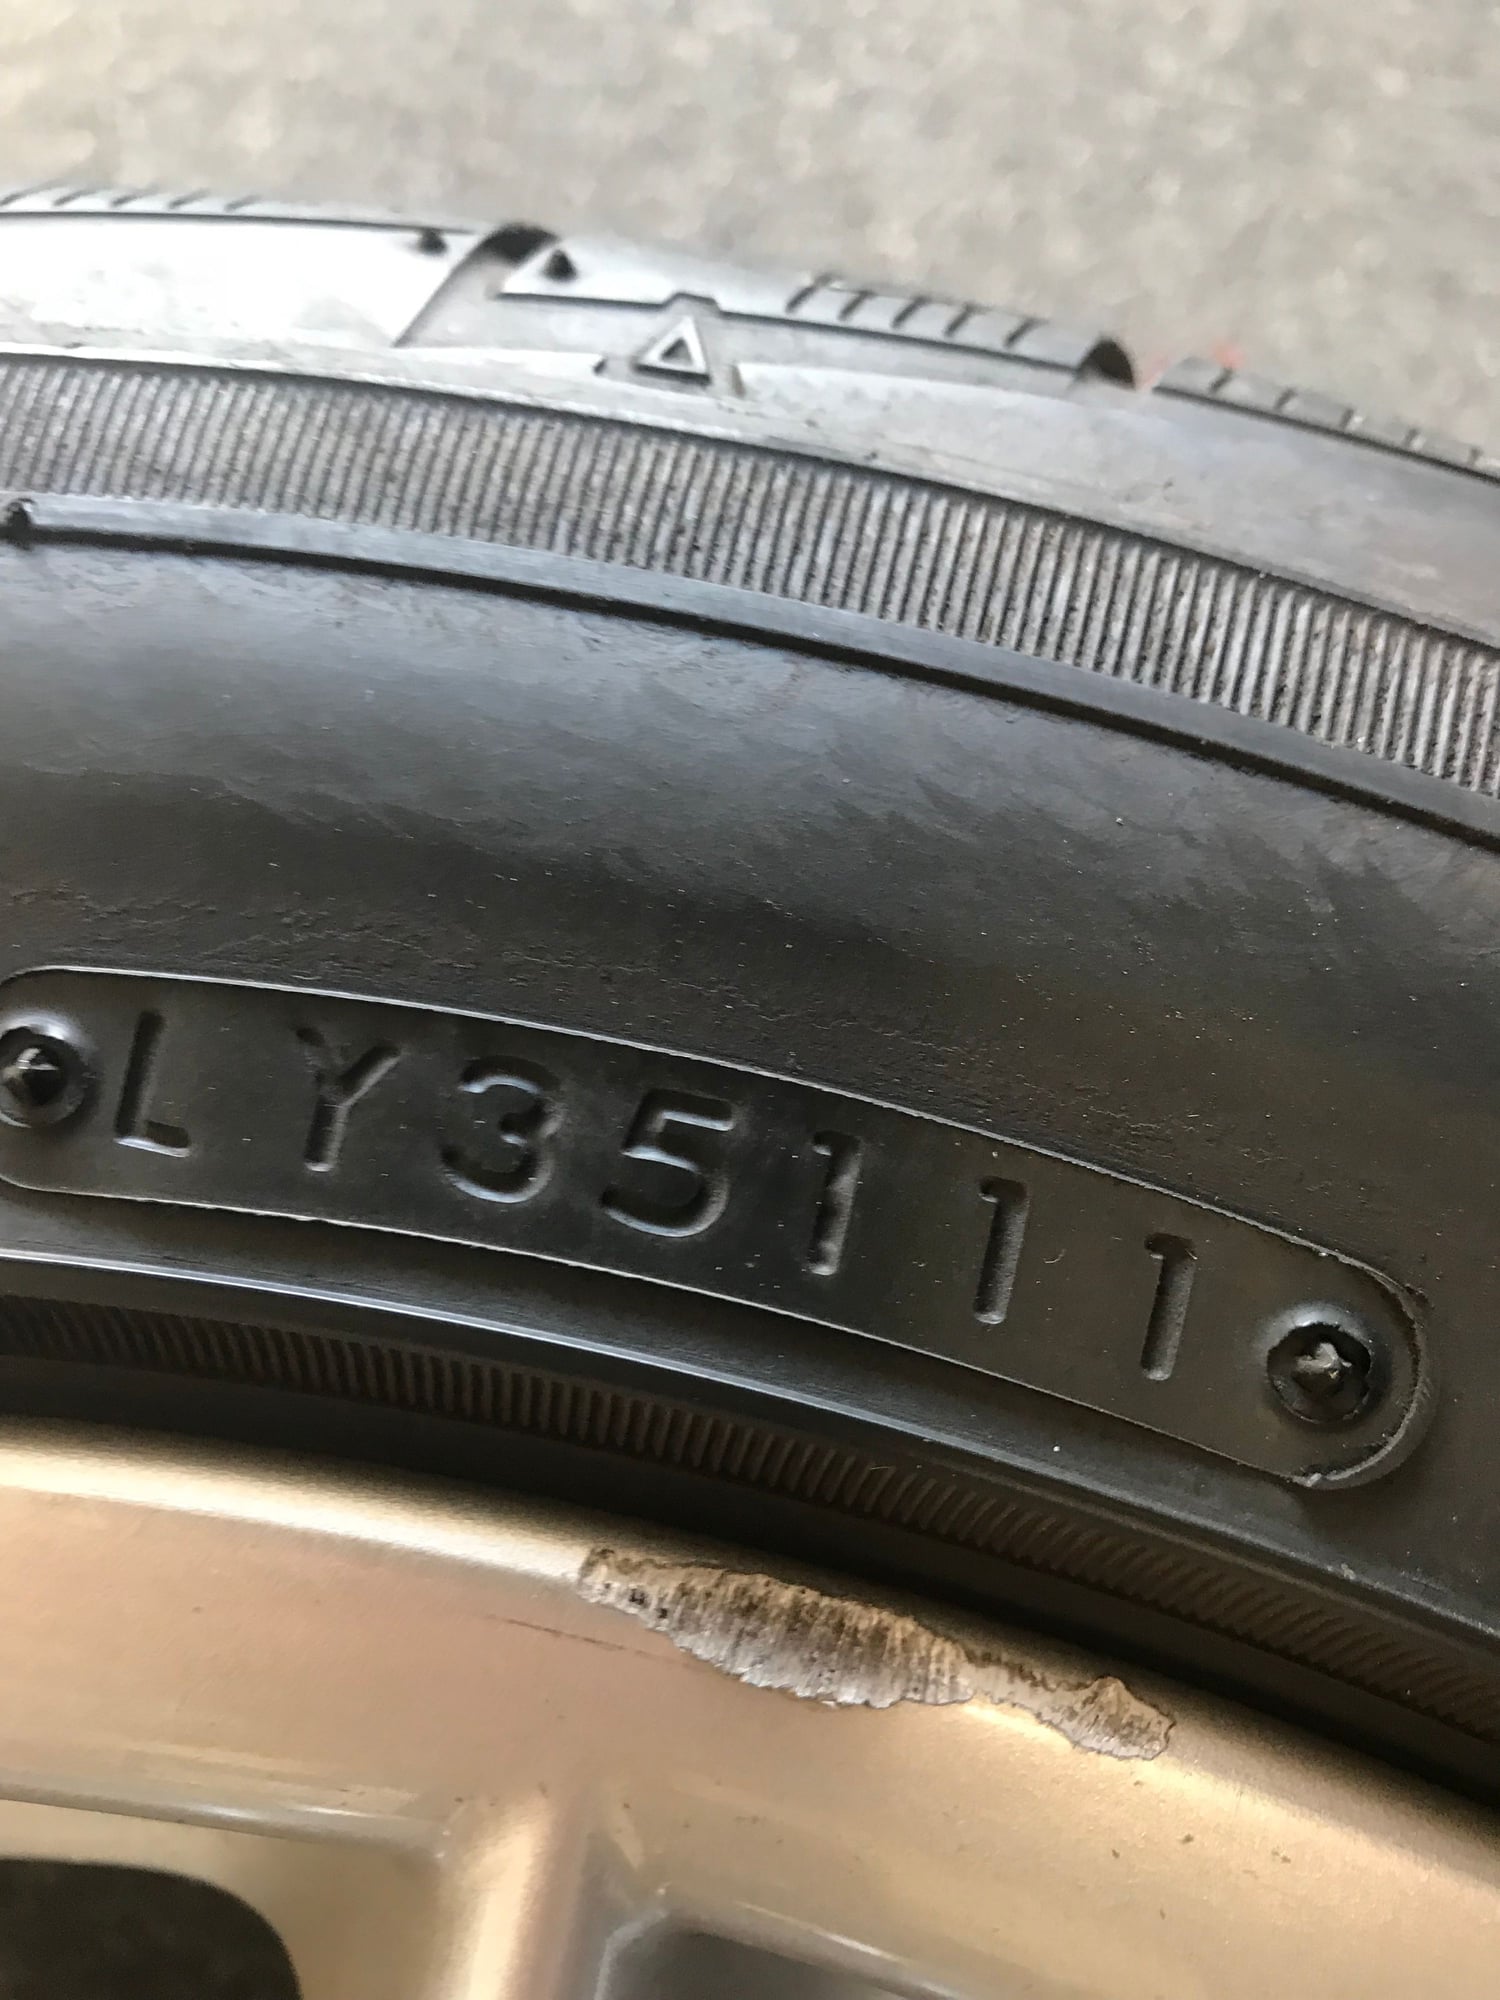 Wheels and Tires/Axles - 911 10-spoke 17" rims decent condition - Used - 2002 to 2005 Porsche 911 - Phoenix, AZ 85040, United States